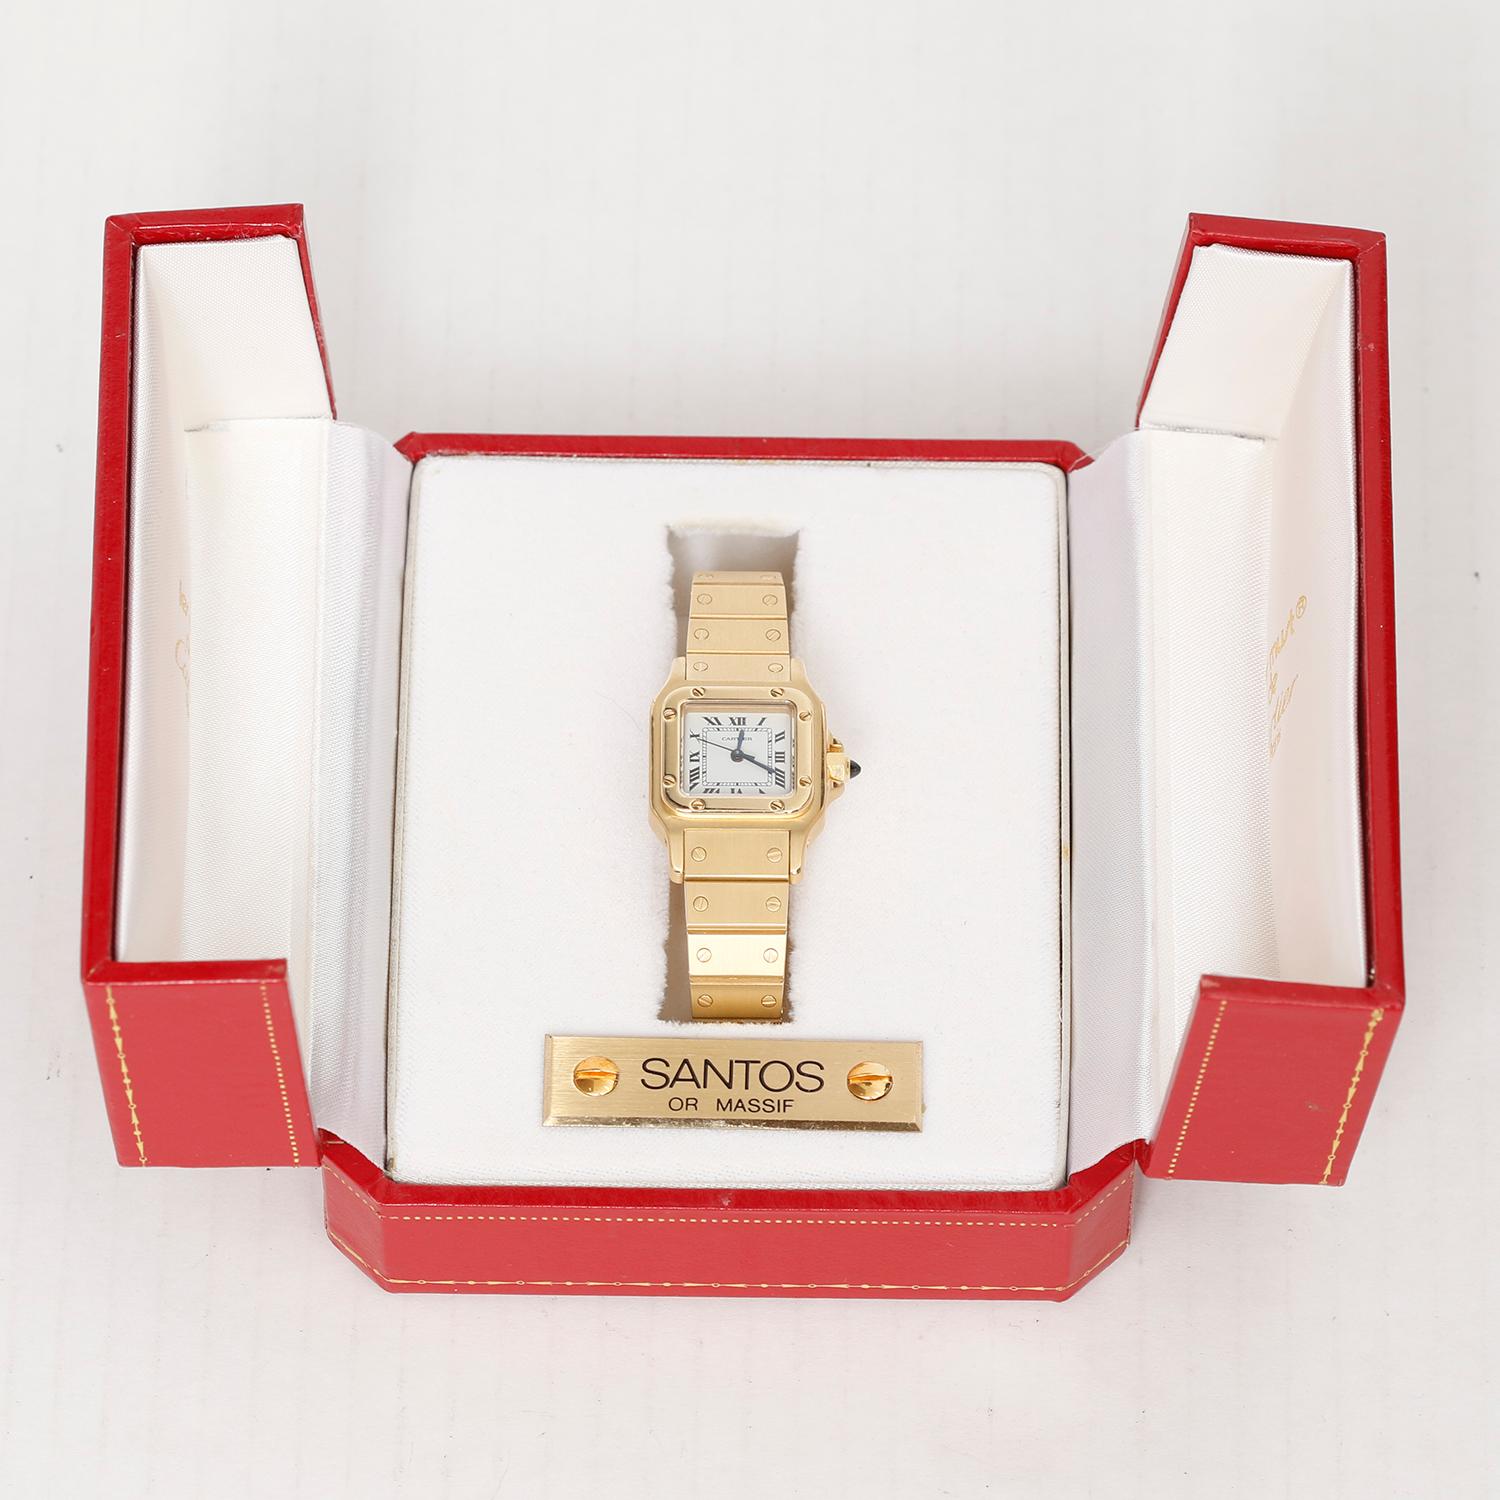 cartier ladies 18k gold watch